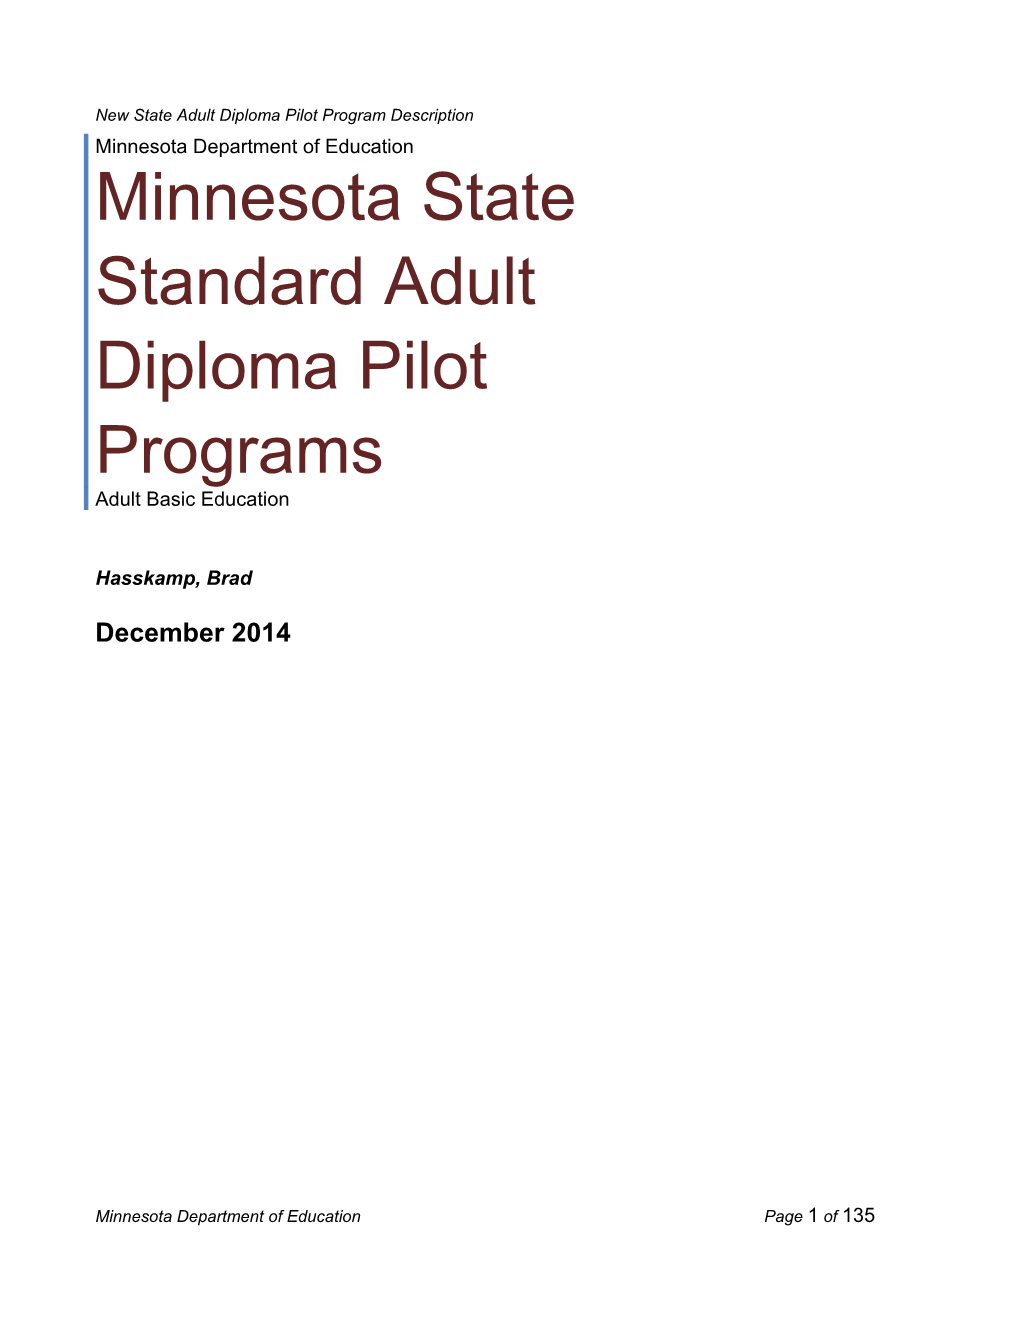 Minnesota State Standard Adult Diploma Pilot Programs